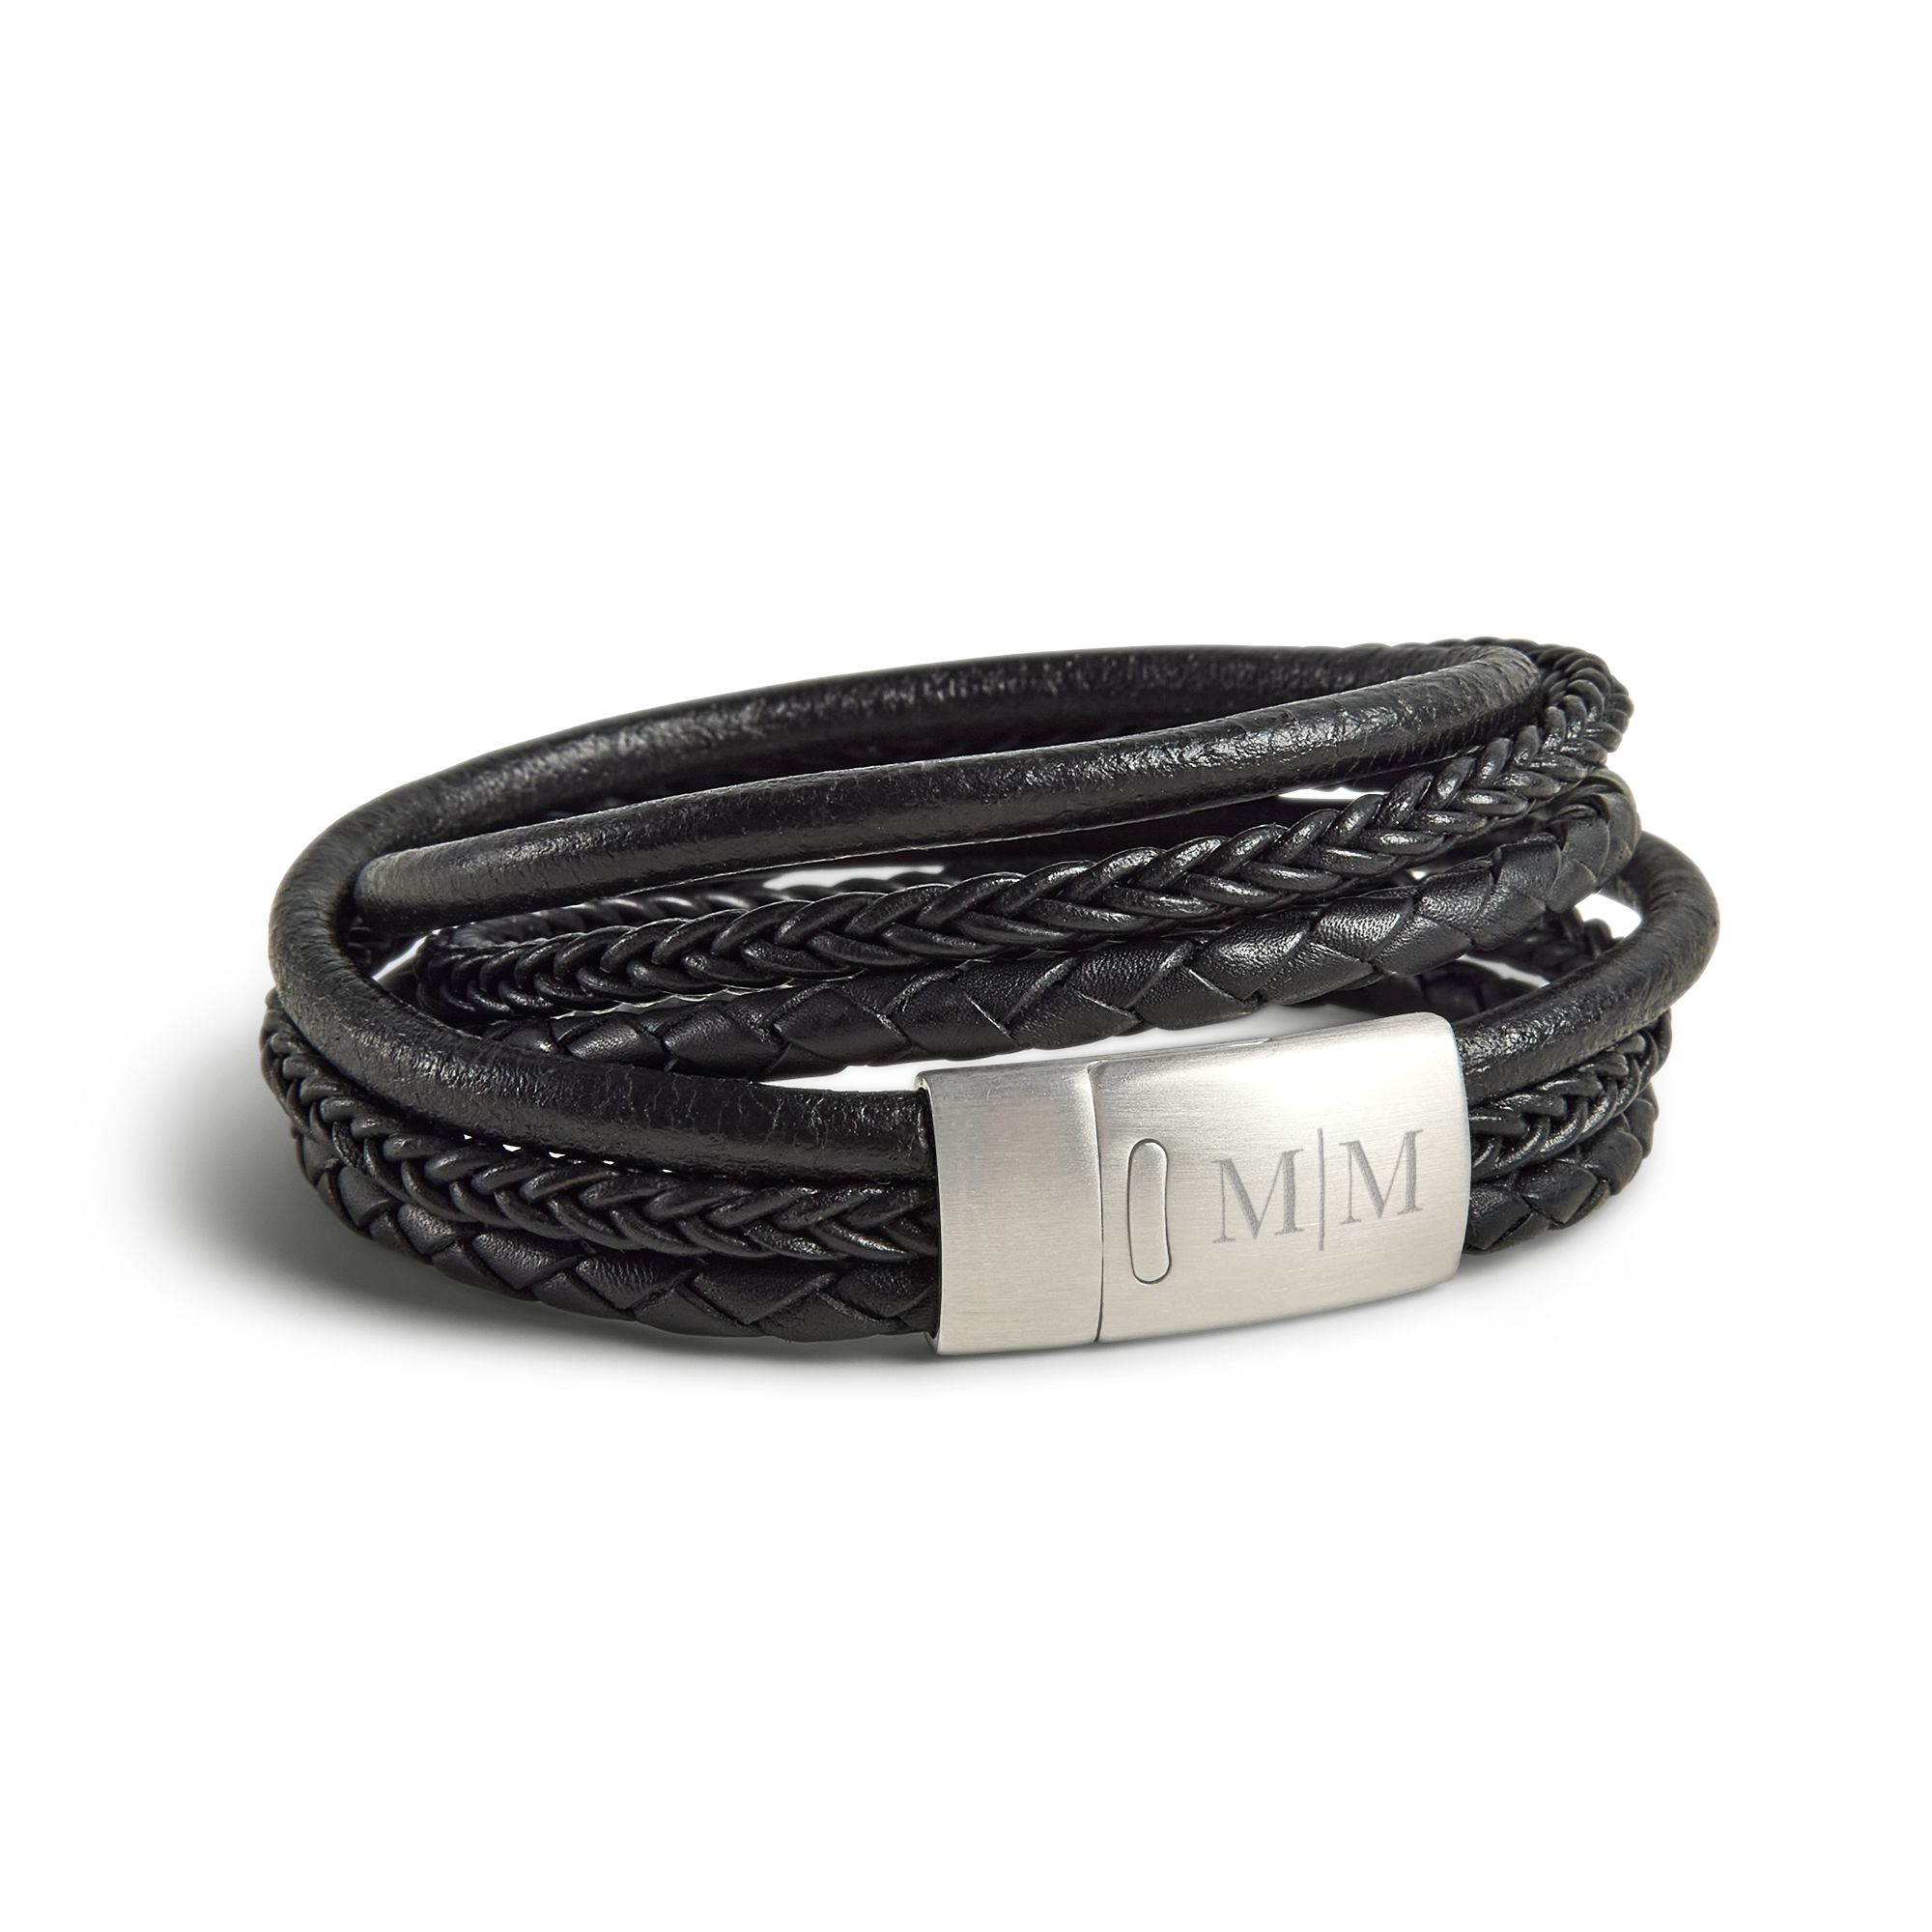 Luxurious double leather bracelet with engraving - Men - Black - L 